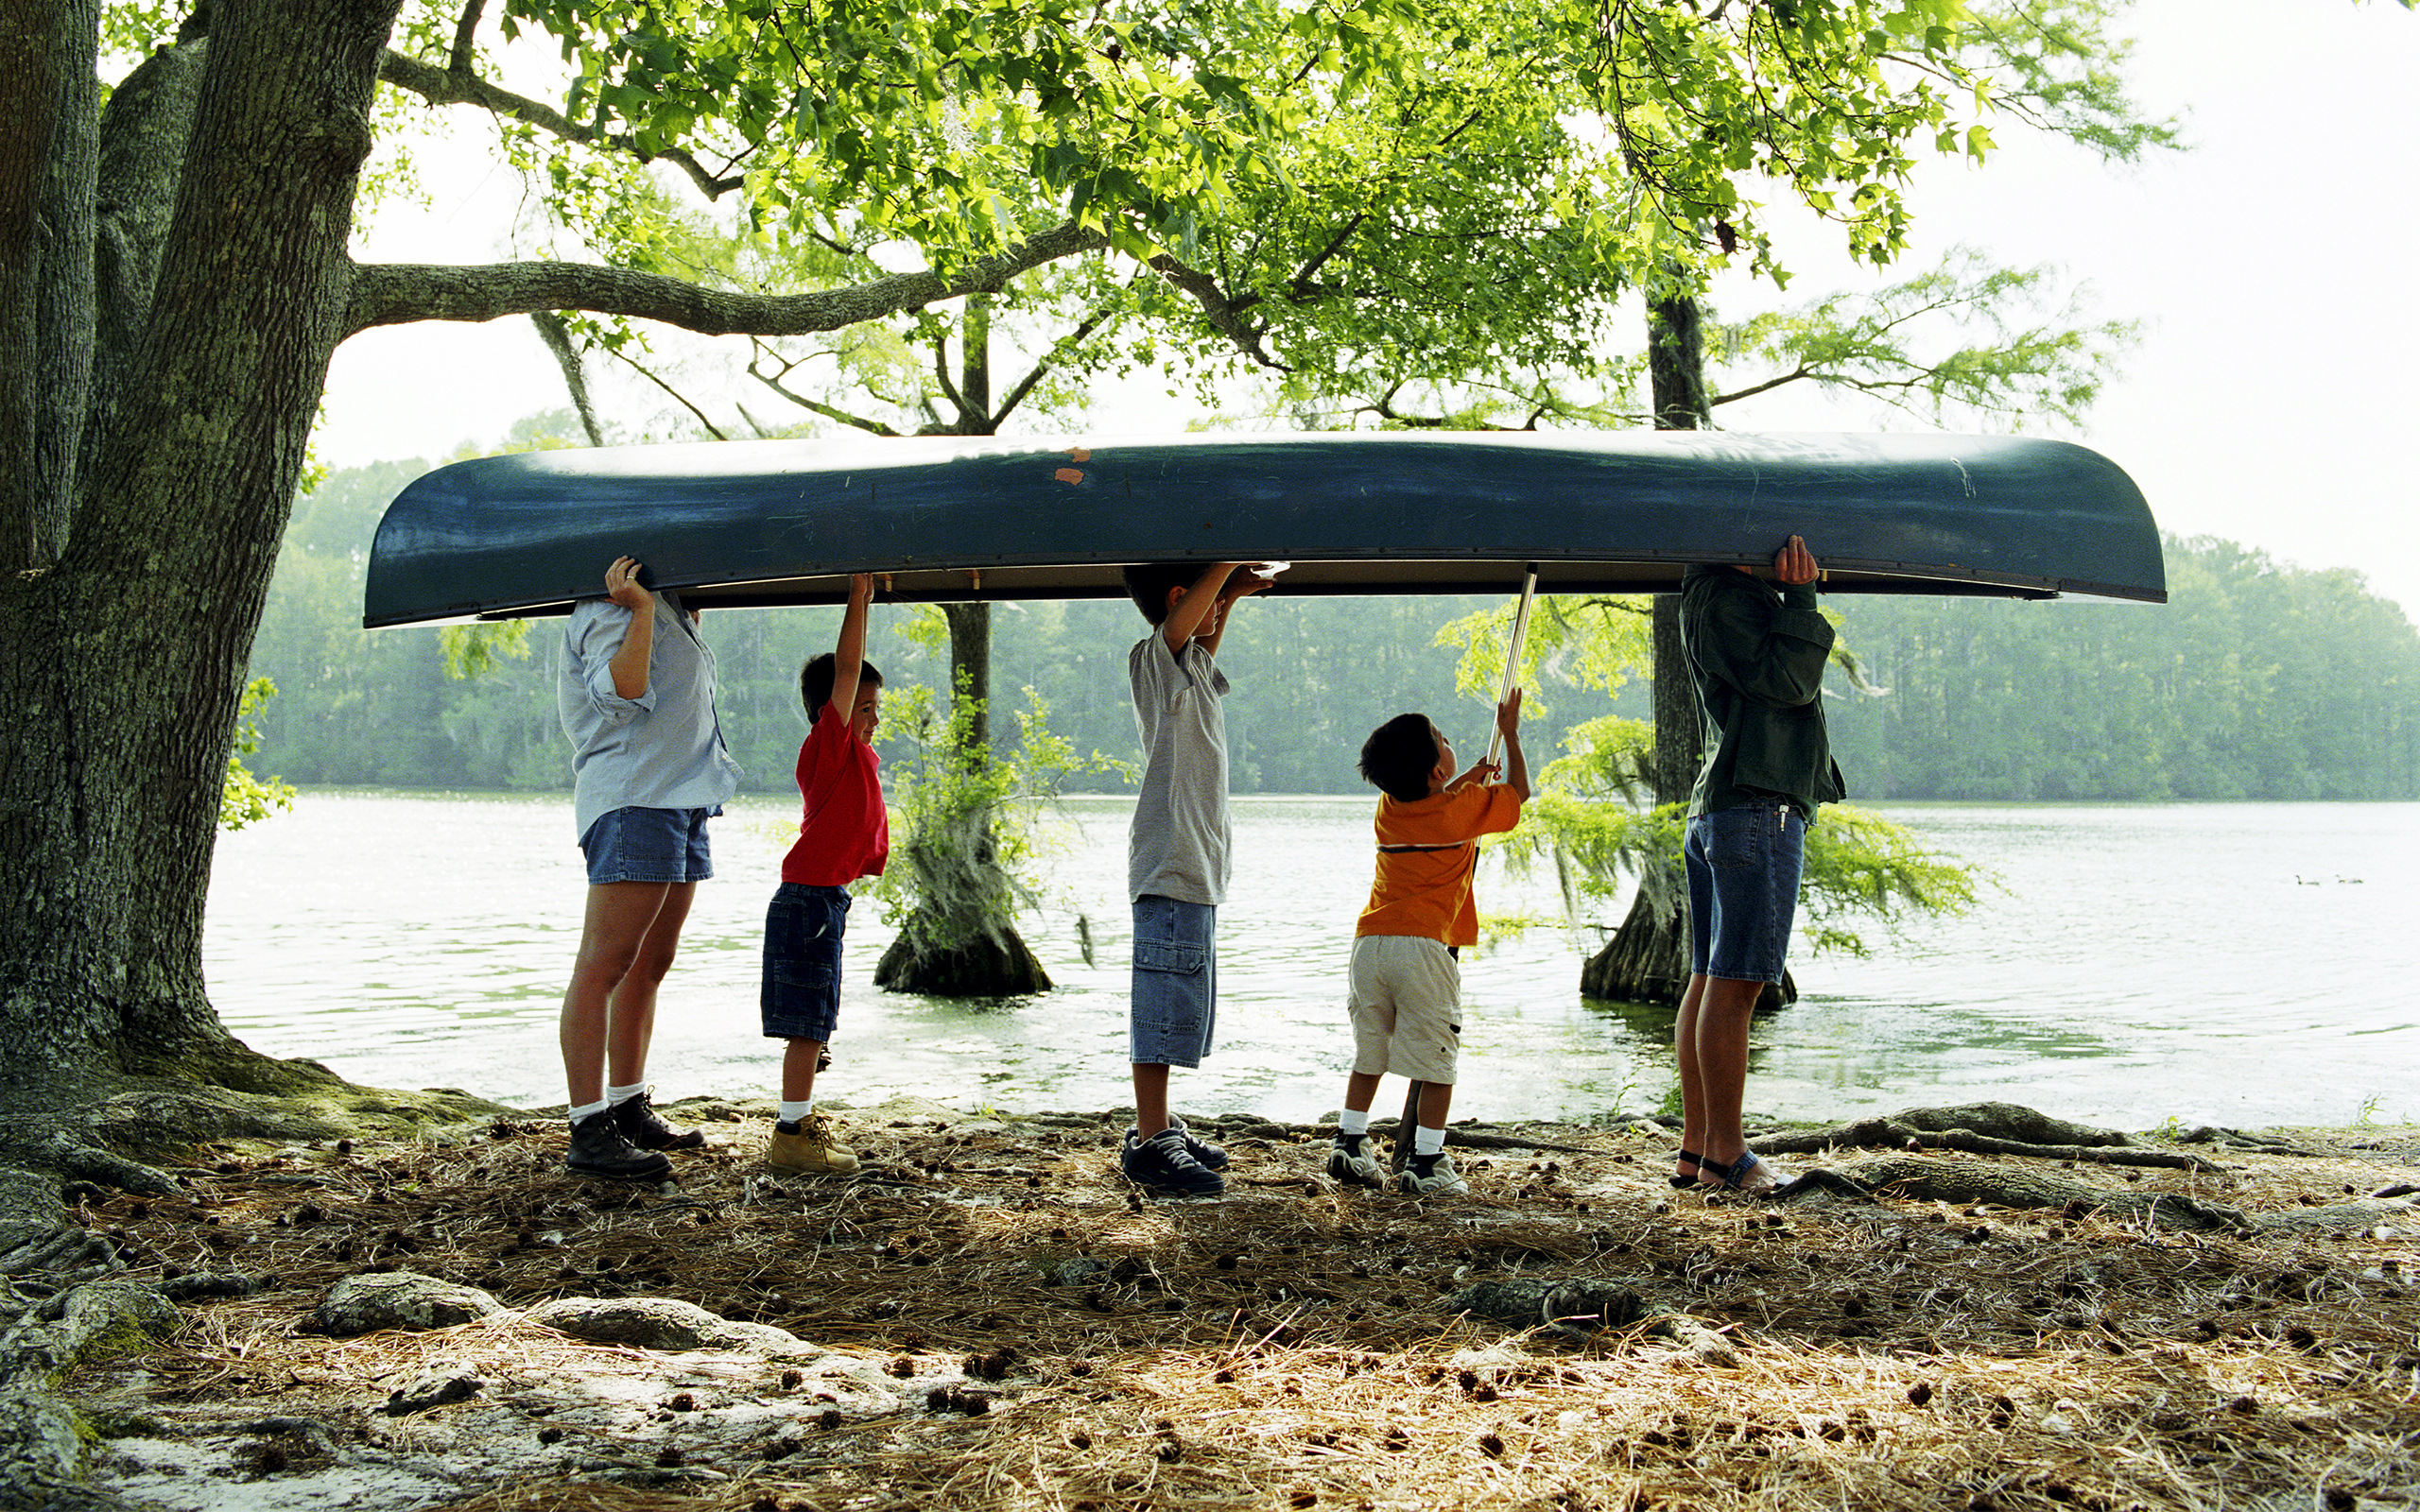 A family carries a canoe near a lake